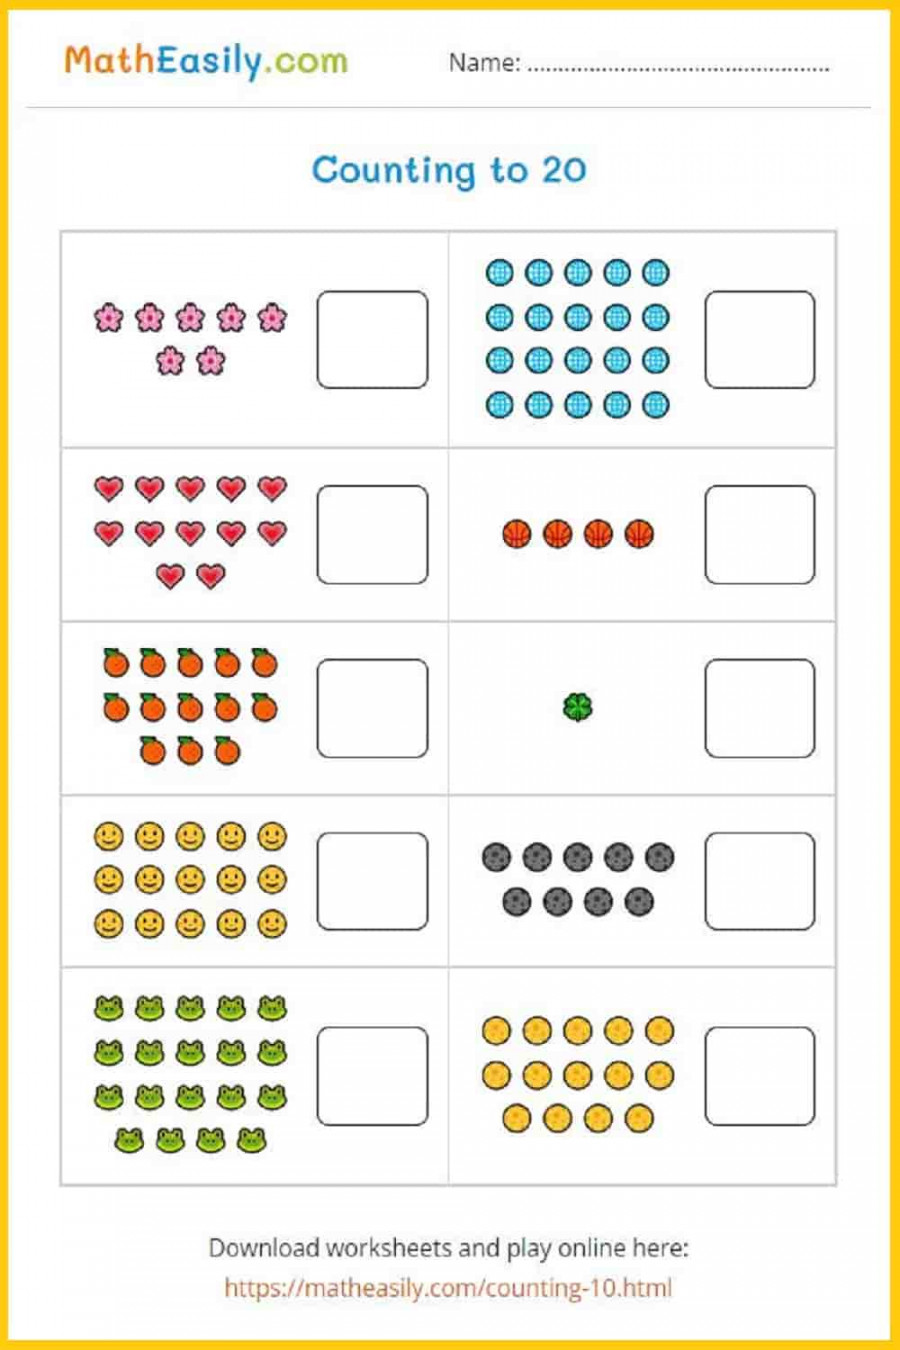 Online Counting Games for Kindergarten - + Worksheets